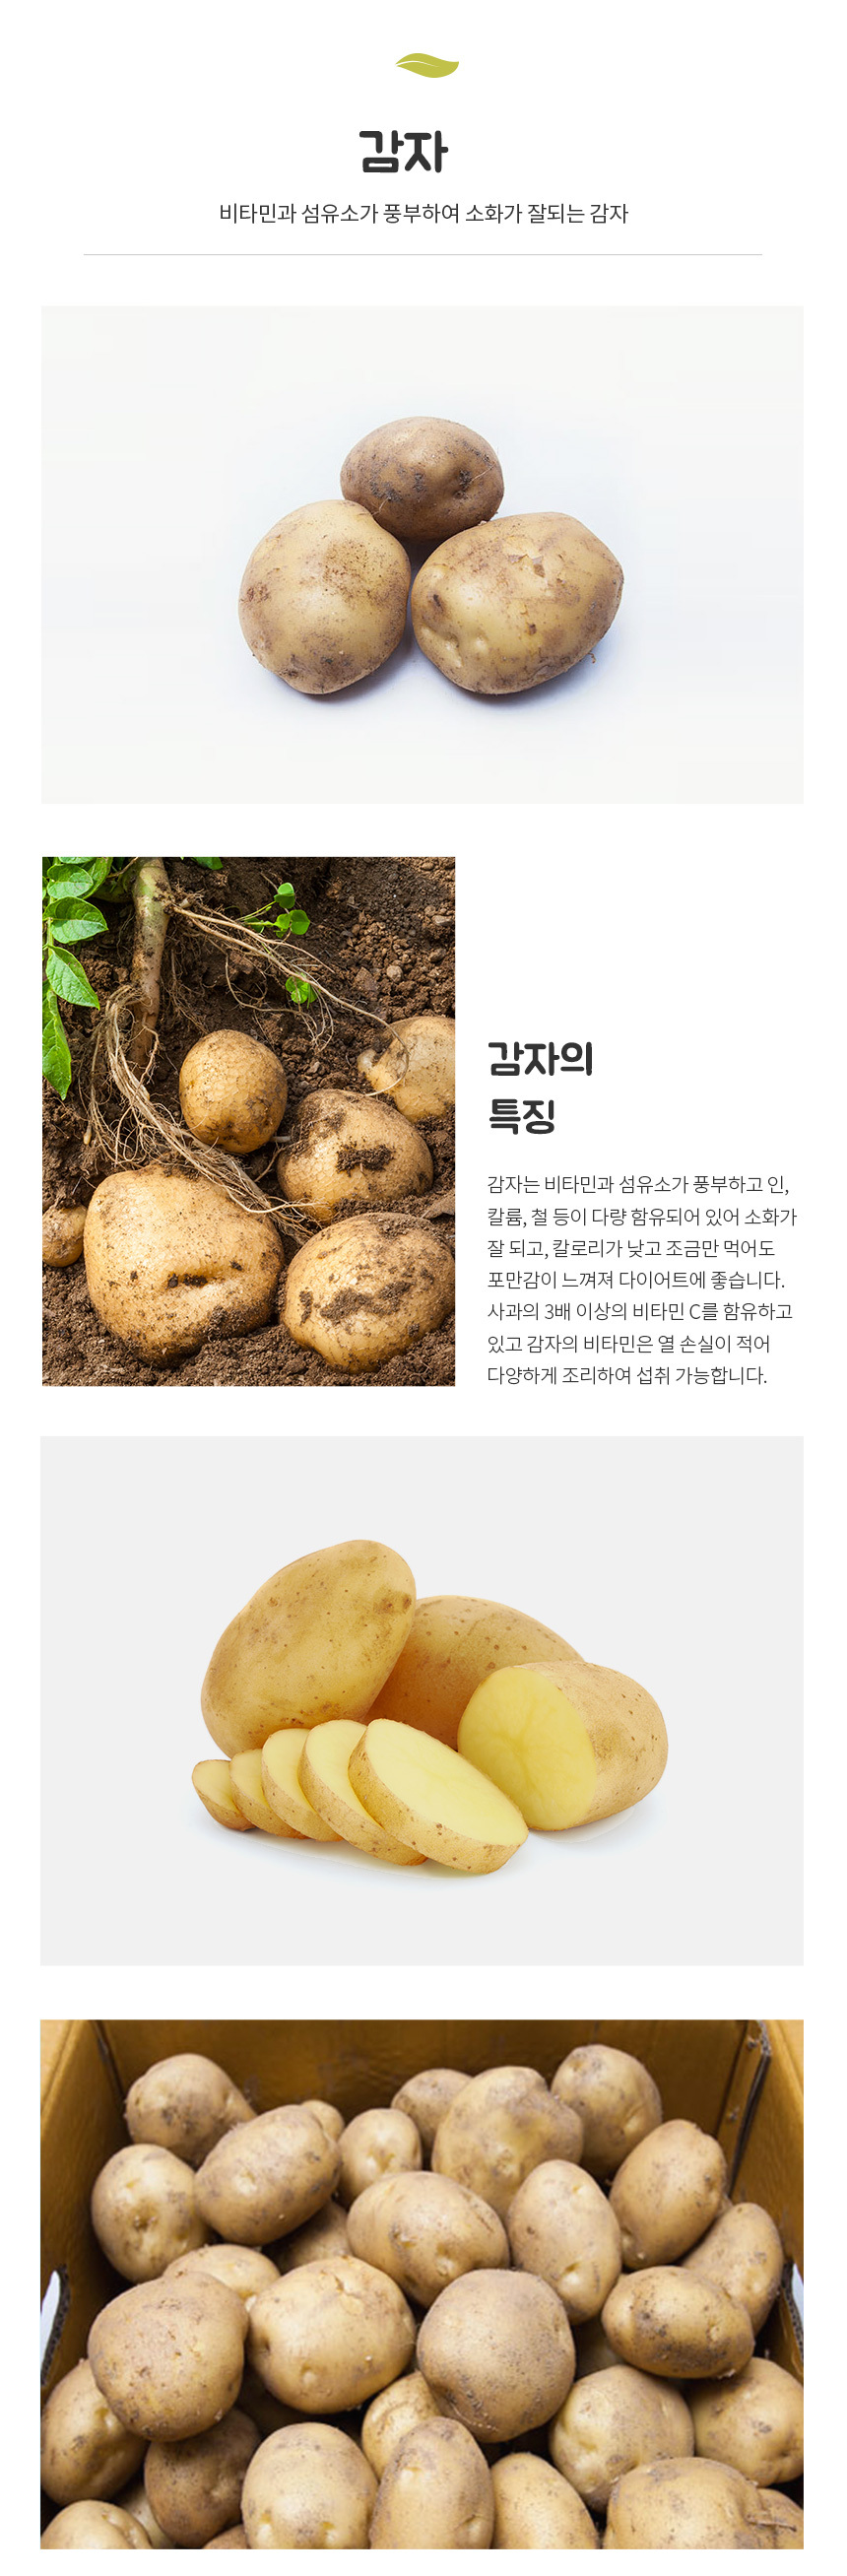 01_potato.jpg